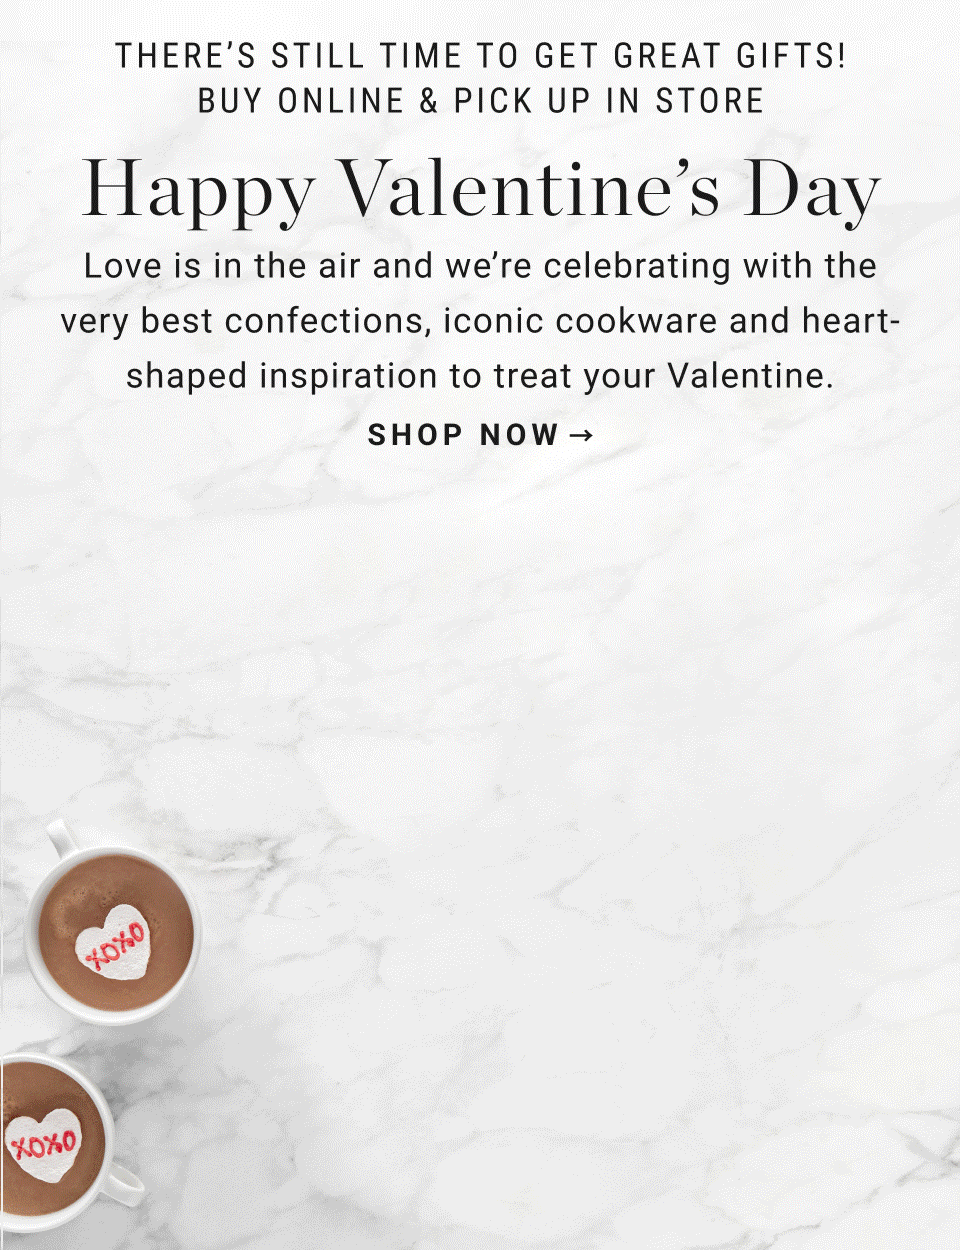 VALENTINES DAY ROMANTIC GIFTS Him & Her Love Heart Cute Bears Valentine Gift  UK | eBay